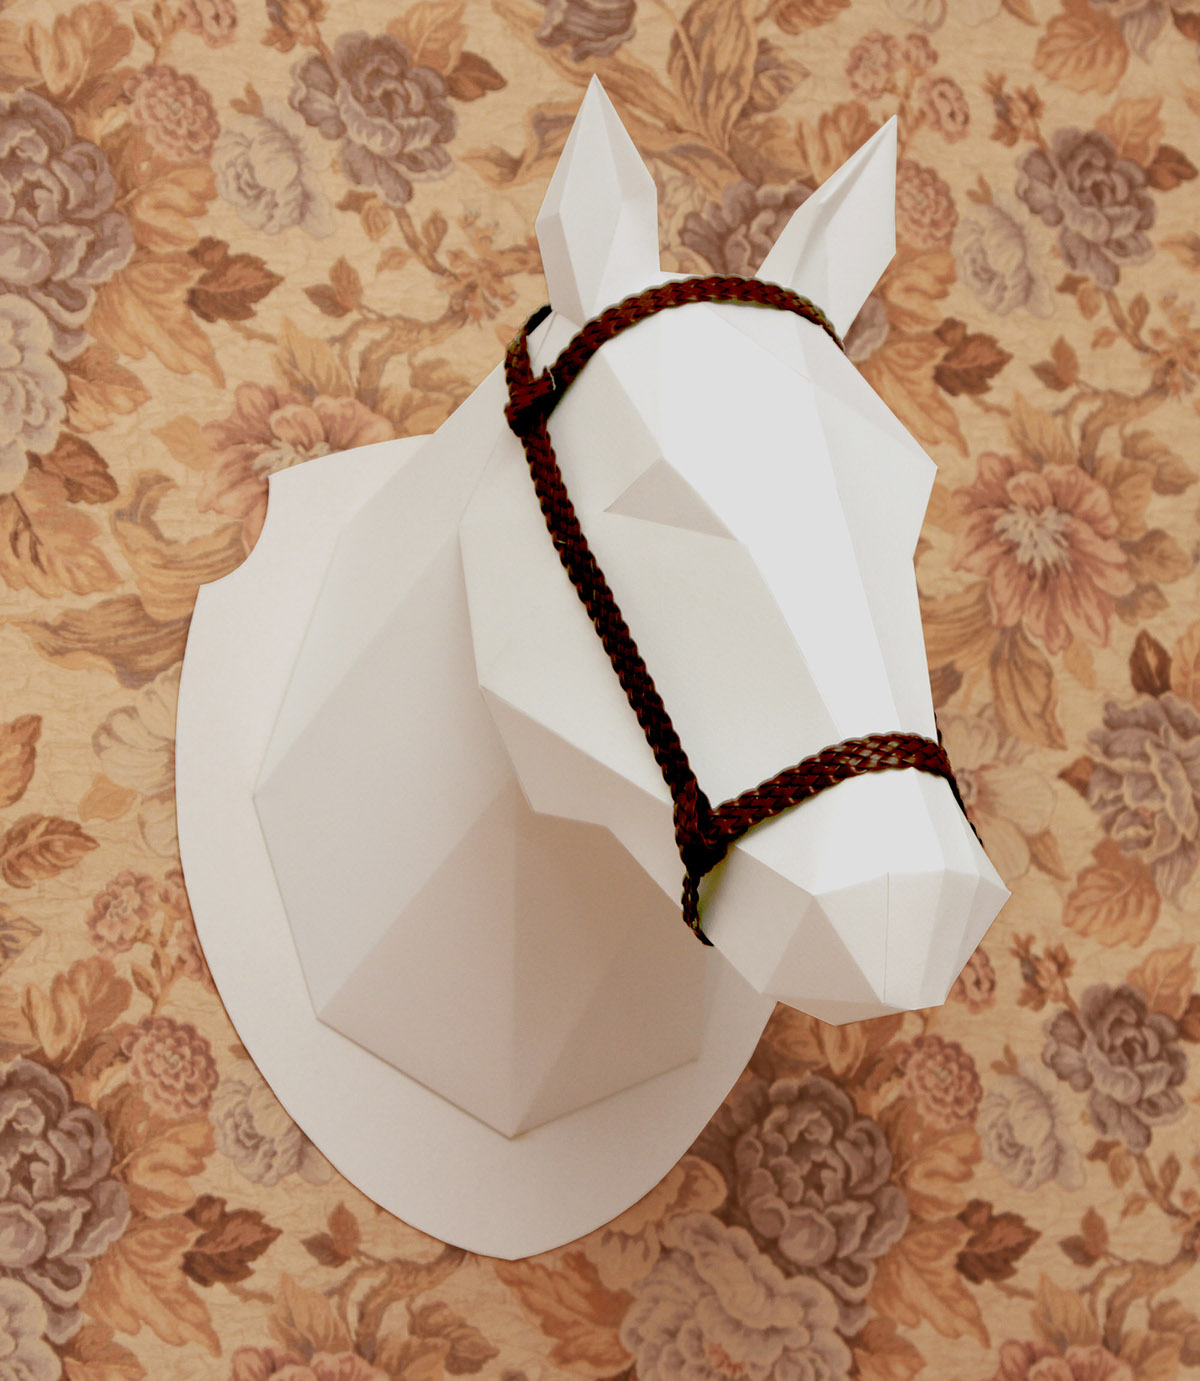 paper horse poly polygonal sculpture gift лошадь конь бумага полигональный гранёный hand-made papercraft DIY trophy